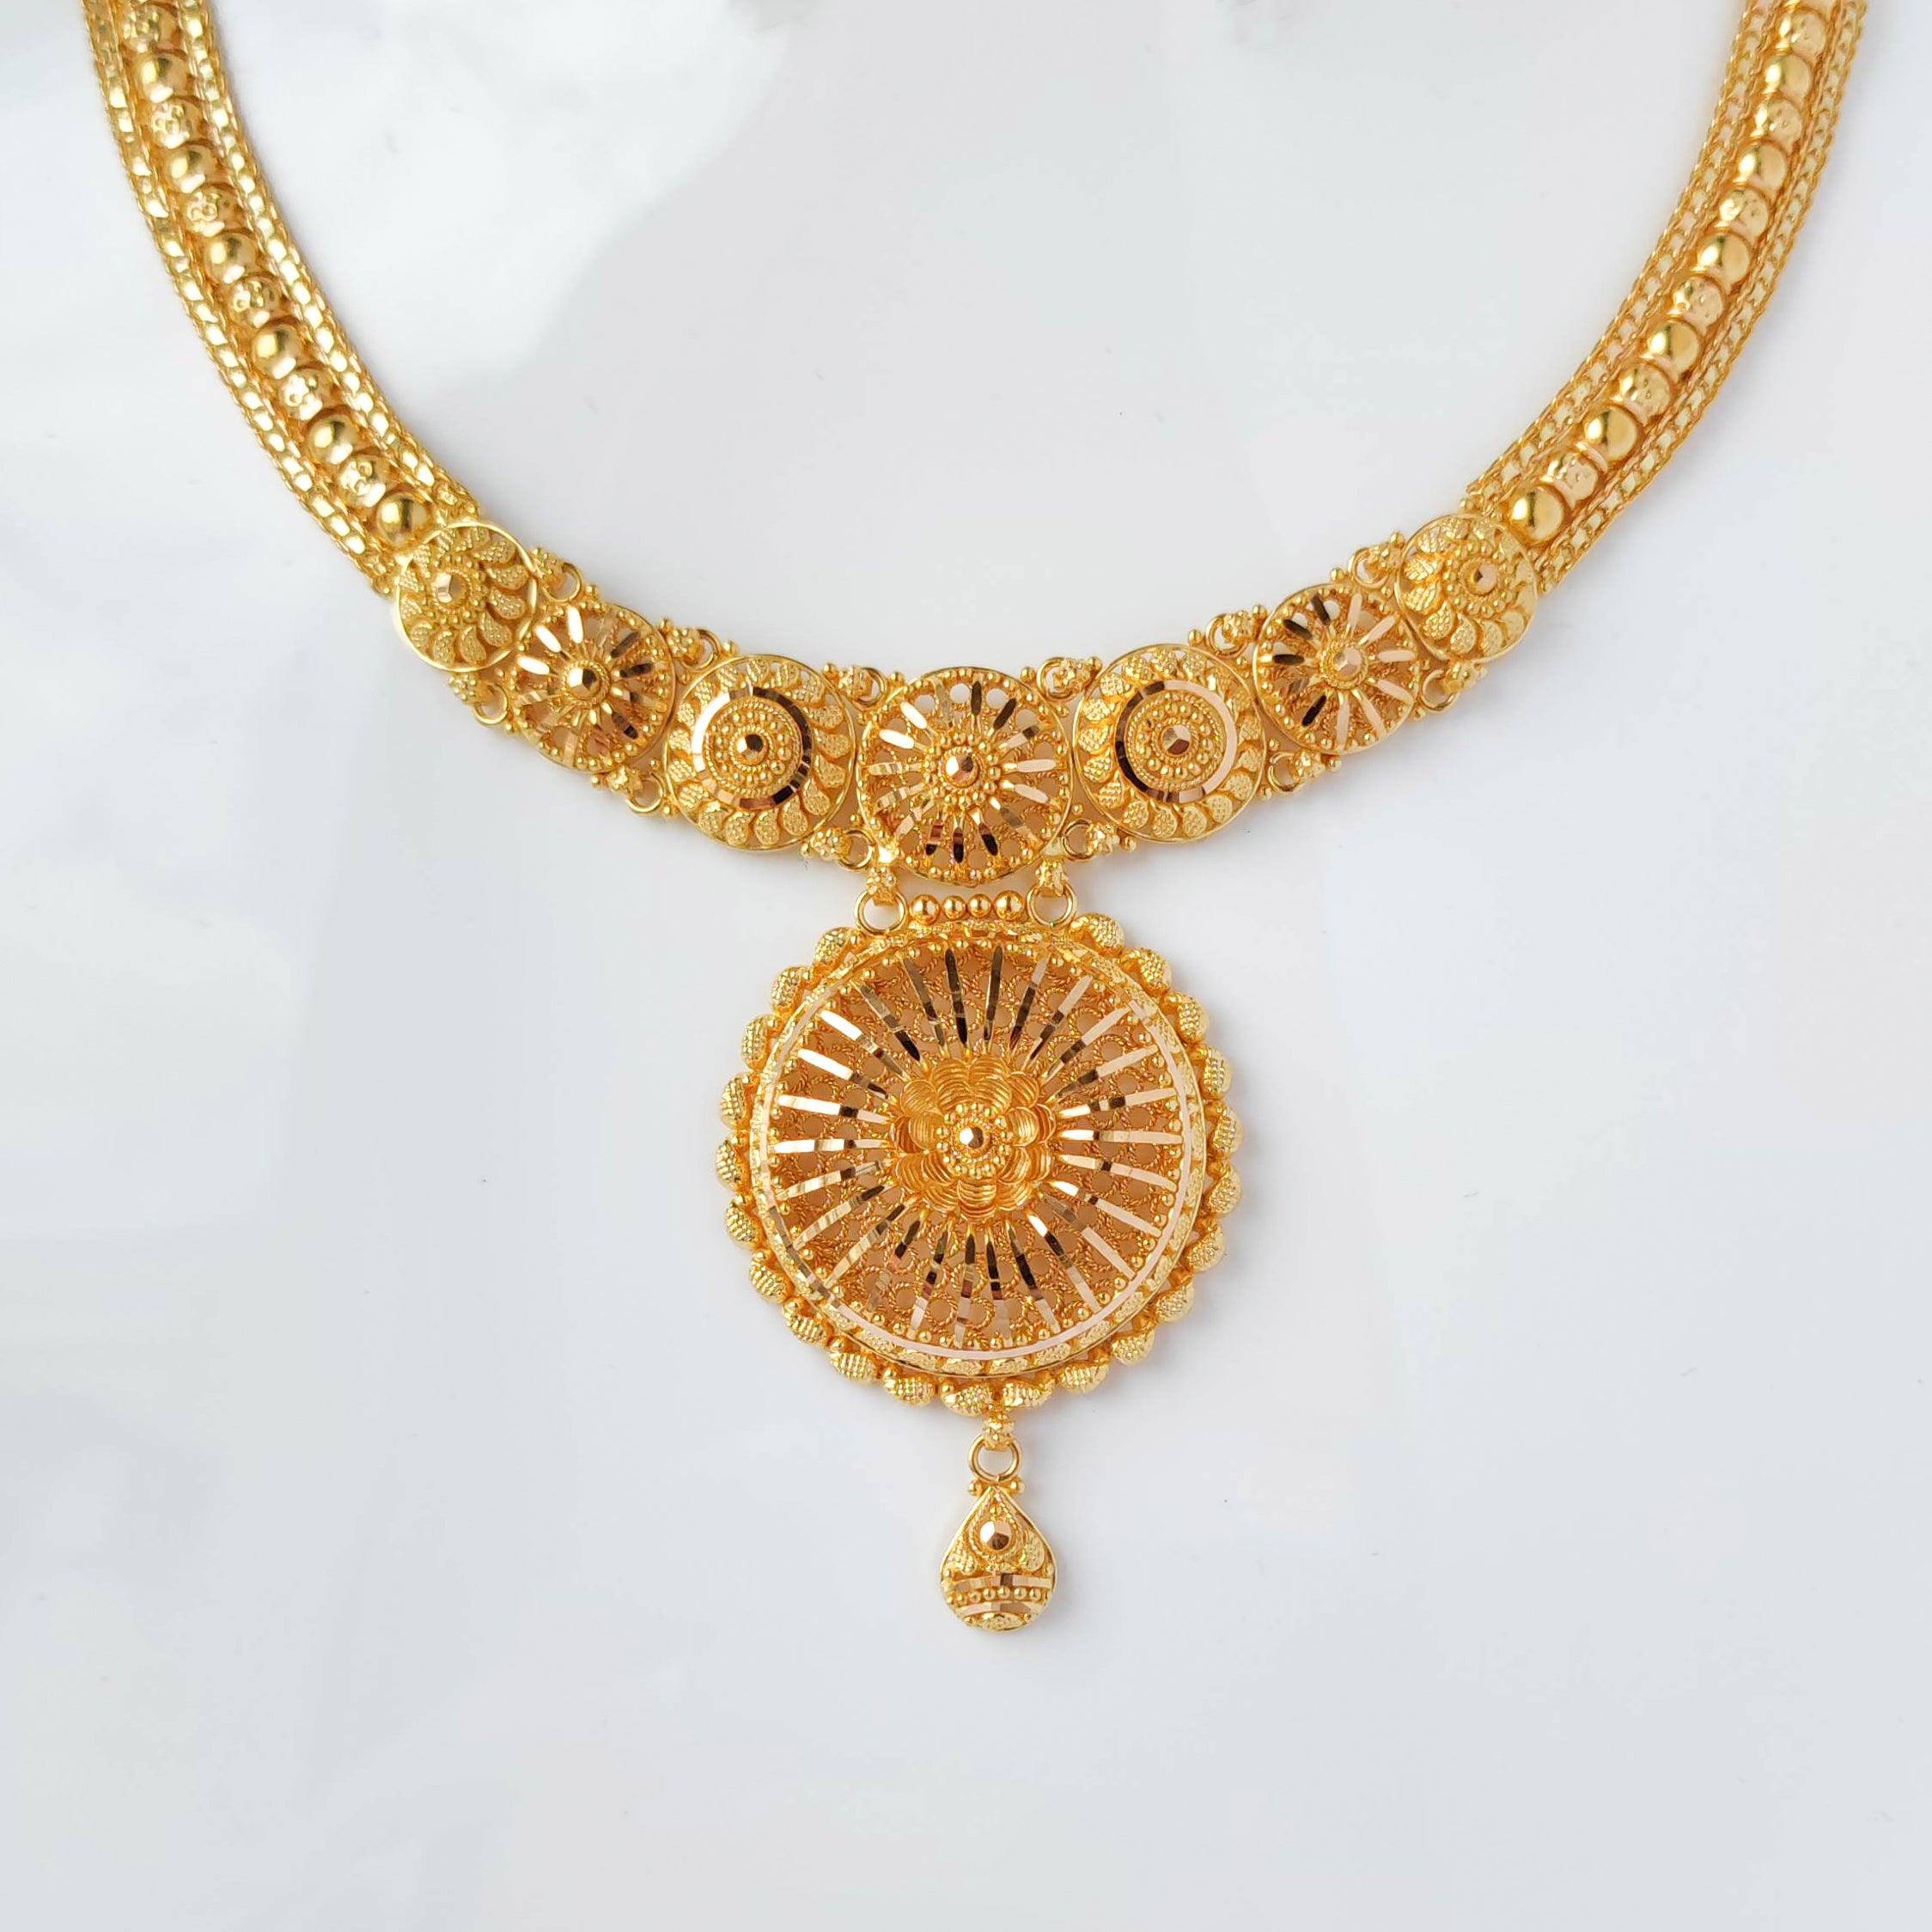 22kt gold chain necklace ethnic gold beads chain mala handmade | eBay